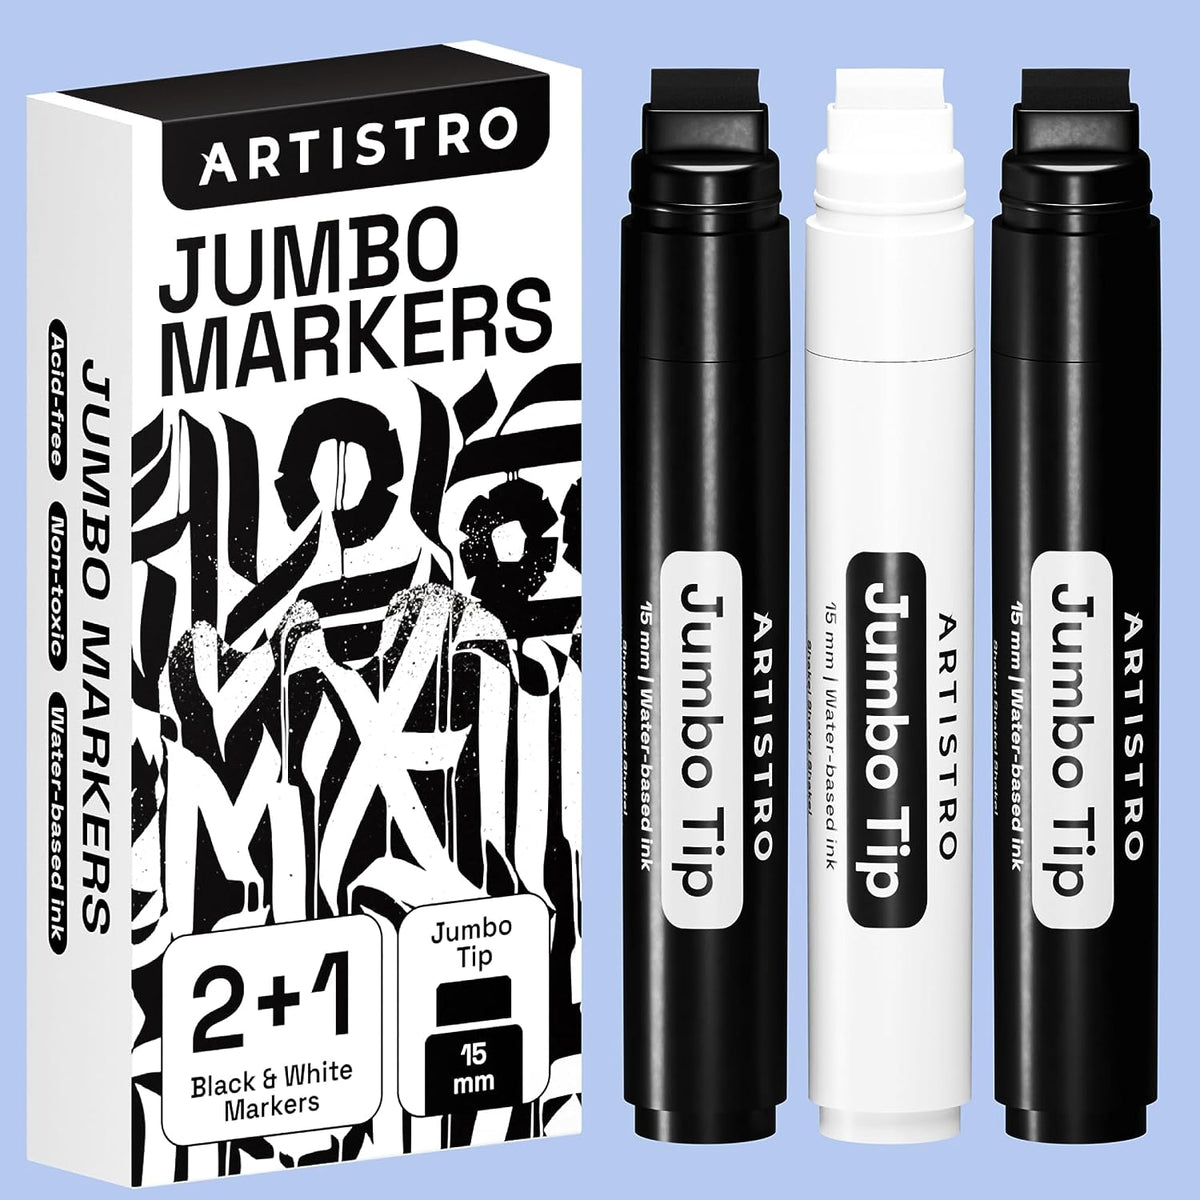 2 Black Acrylic 3mm Medium Tip Paint Pens